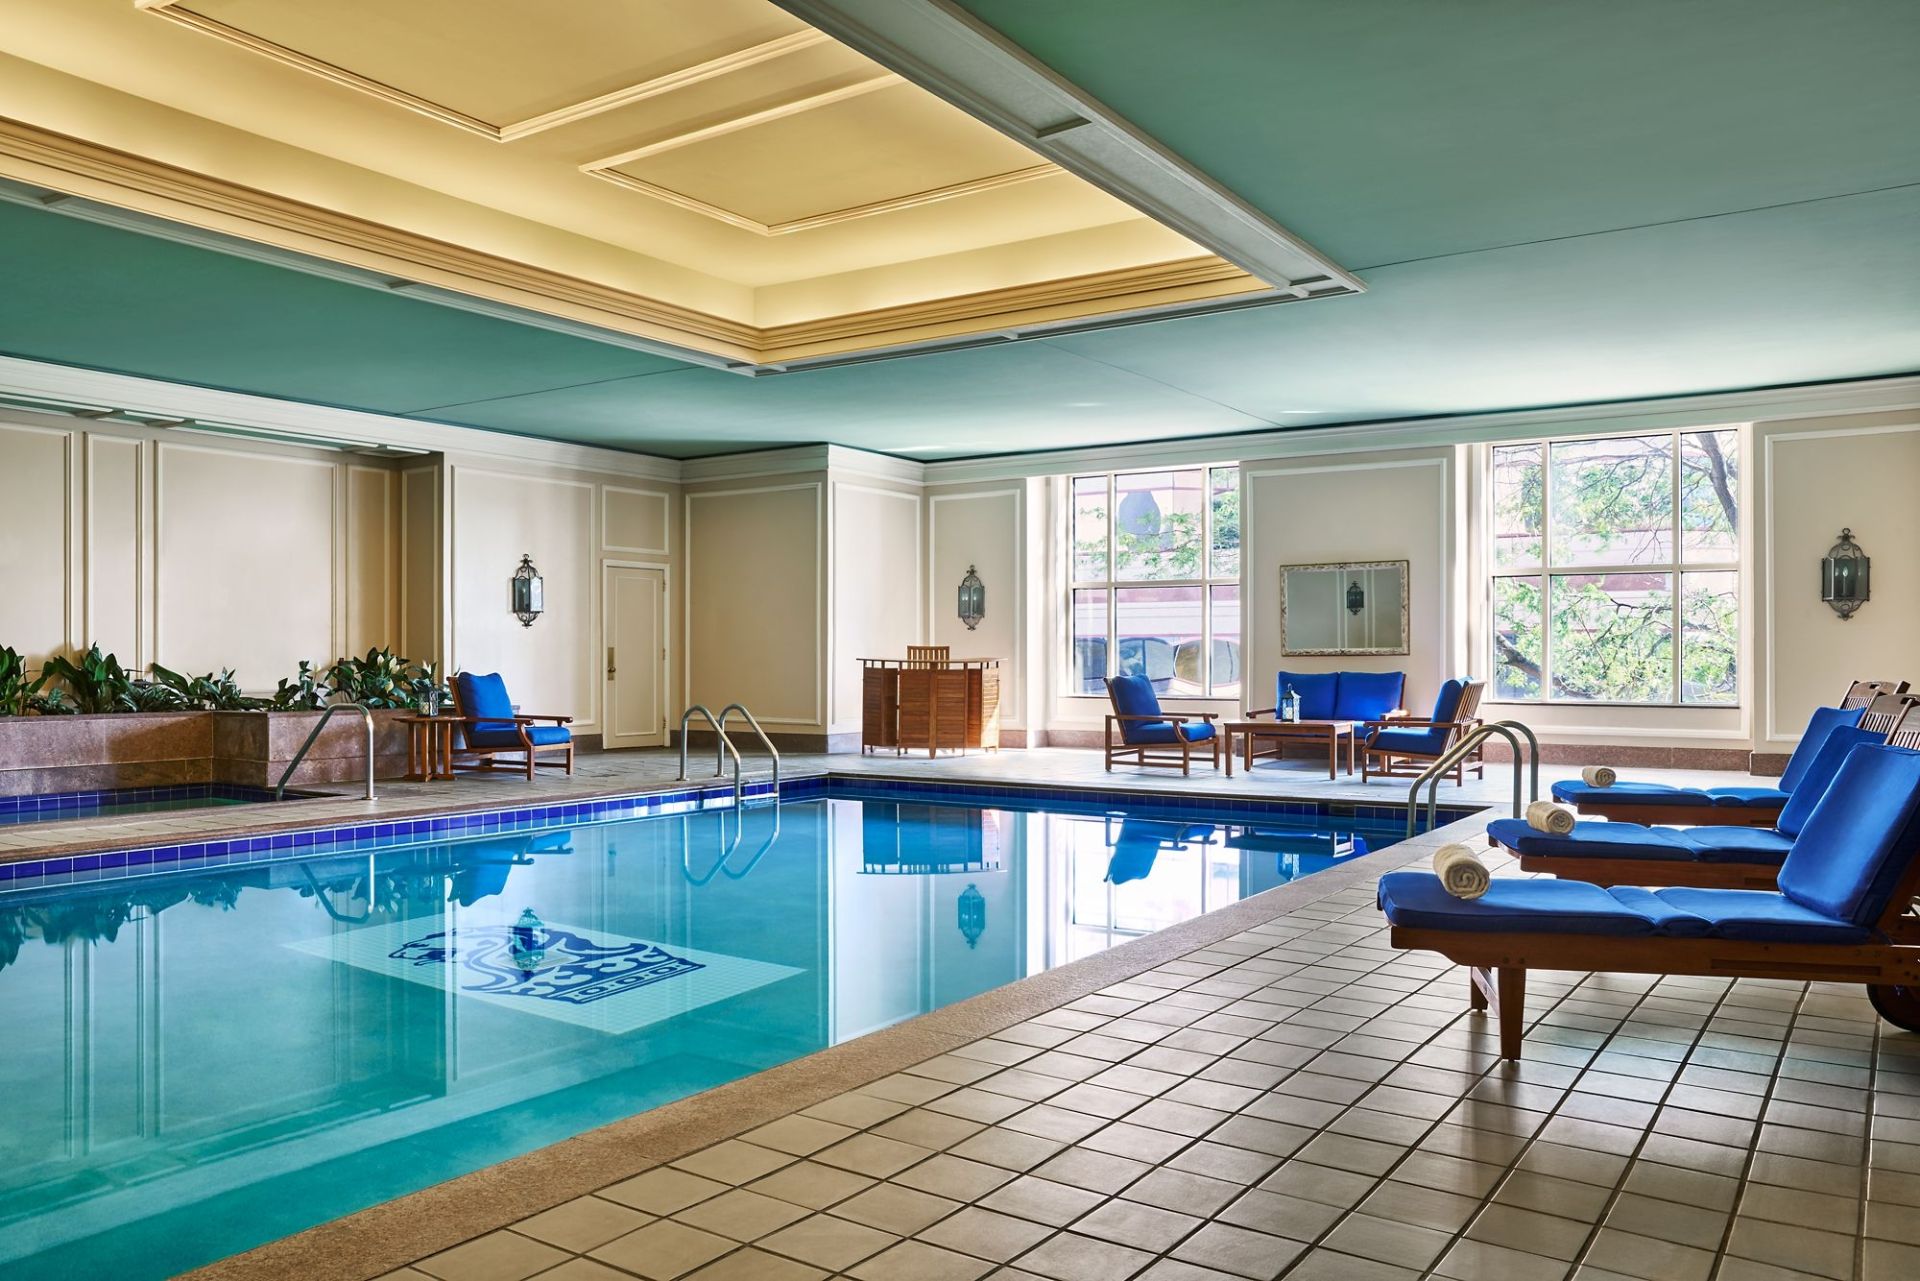 Ritz Carlton swimming pool